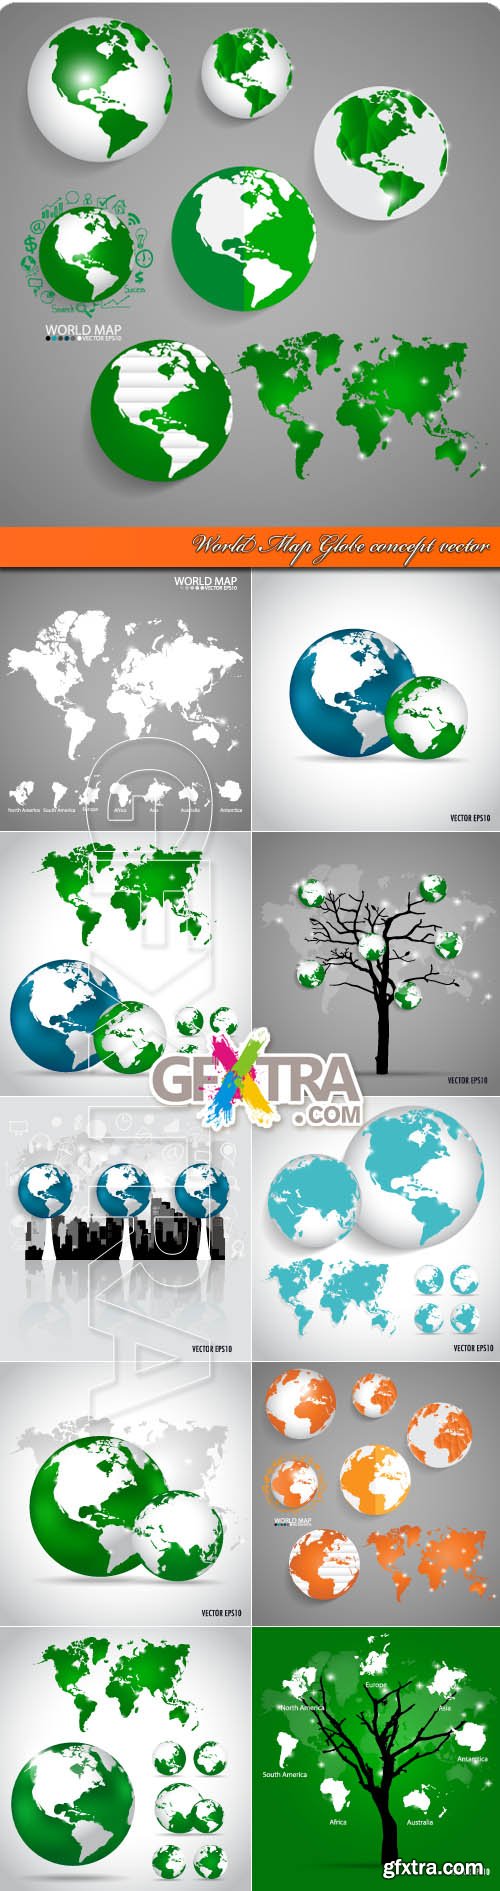 World Map Globe concept vector